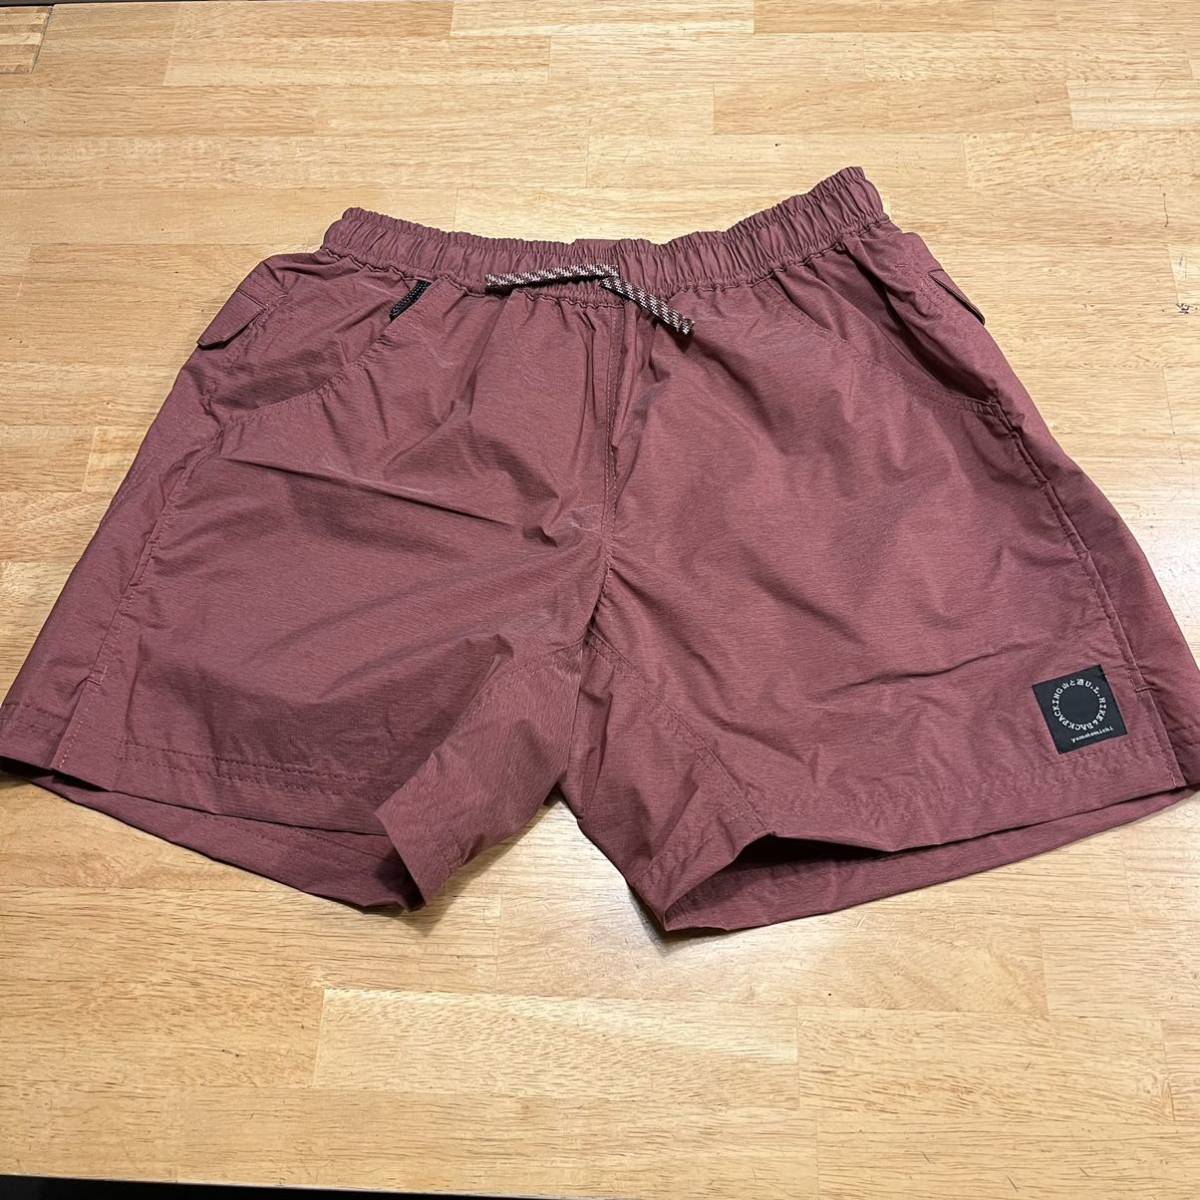 Lサイズ 山と道 Light 5-Pocket Shorts ショート パンツ ショーツ 